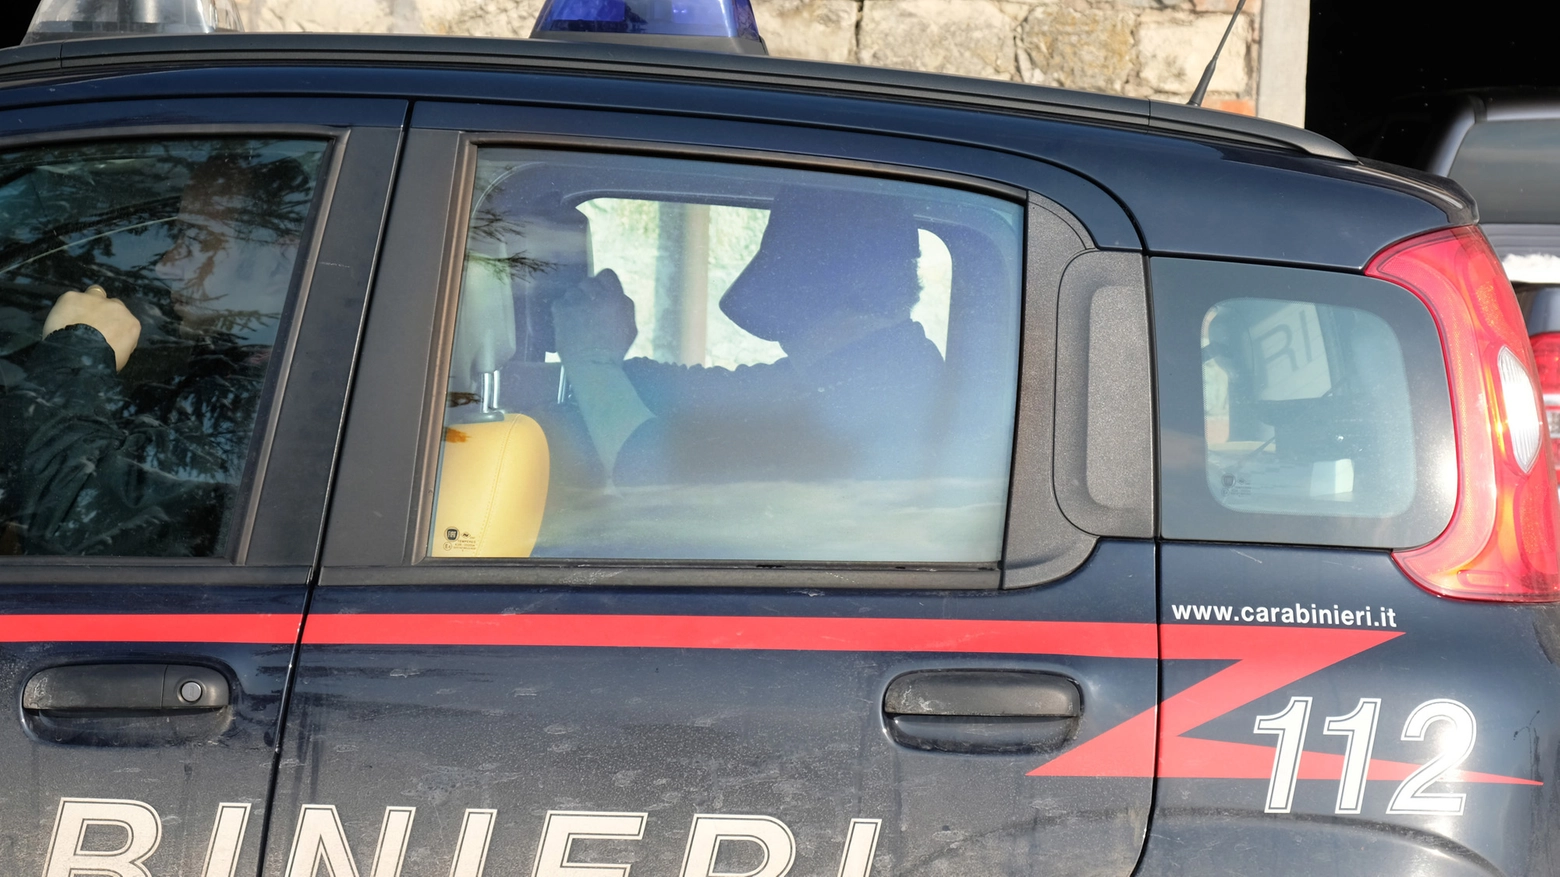 Angelo Rainone sull'auto dei carabinieri 